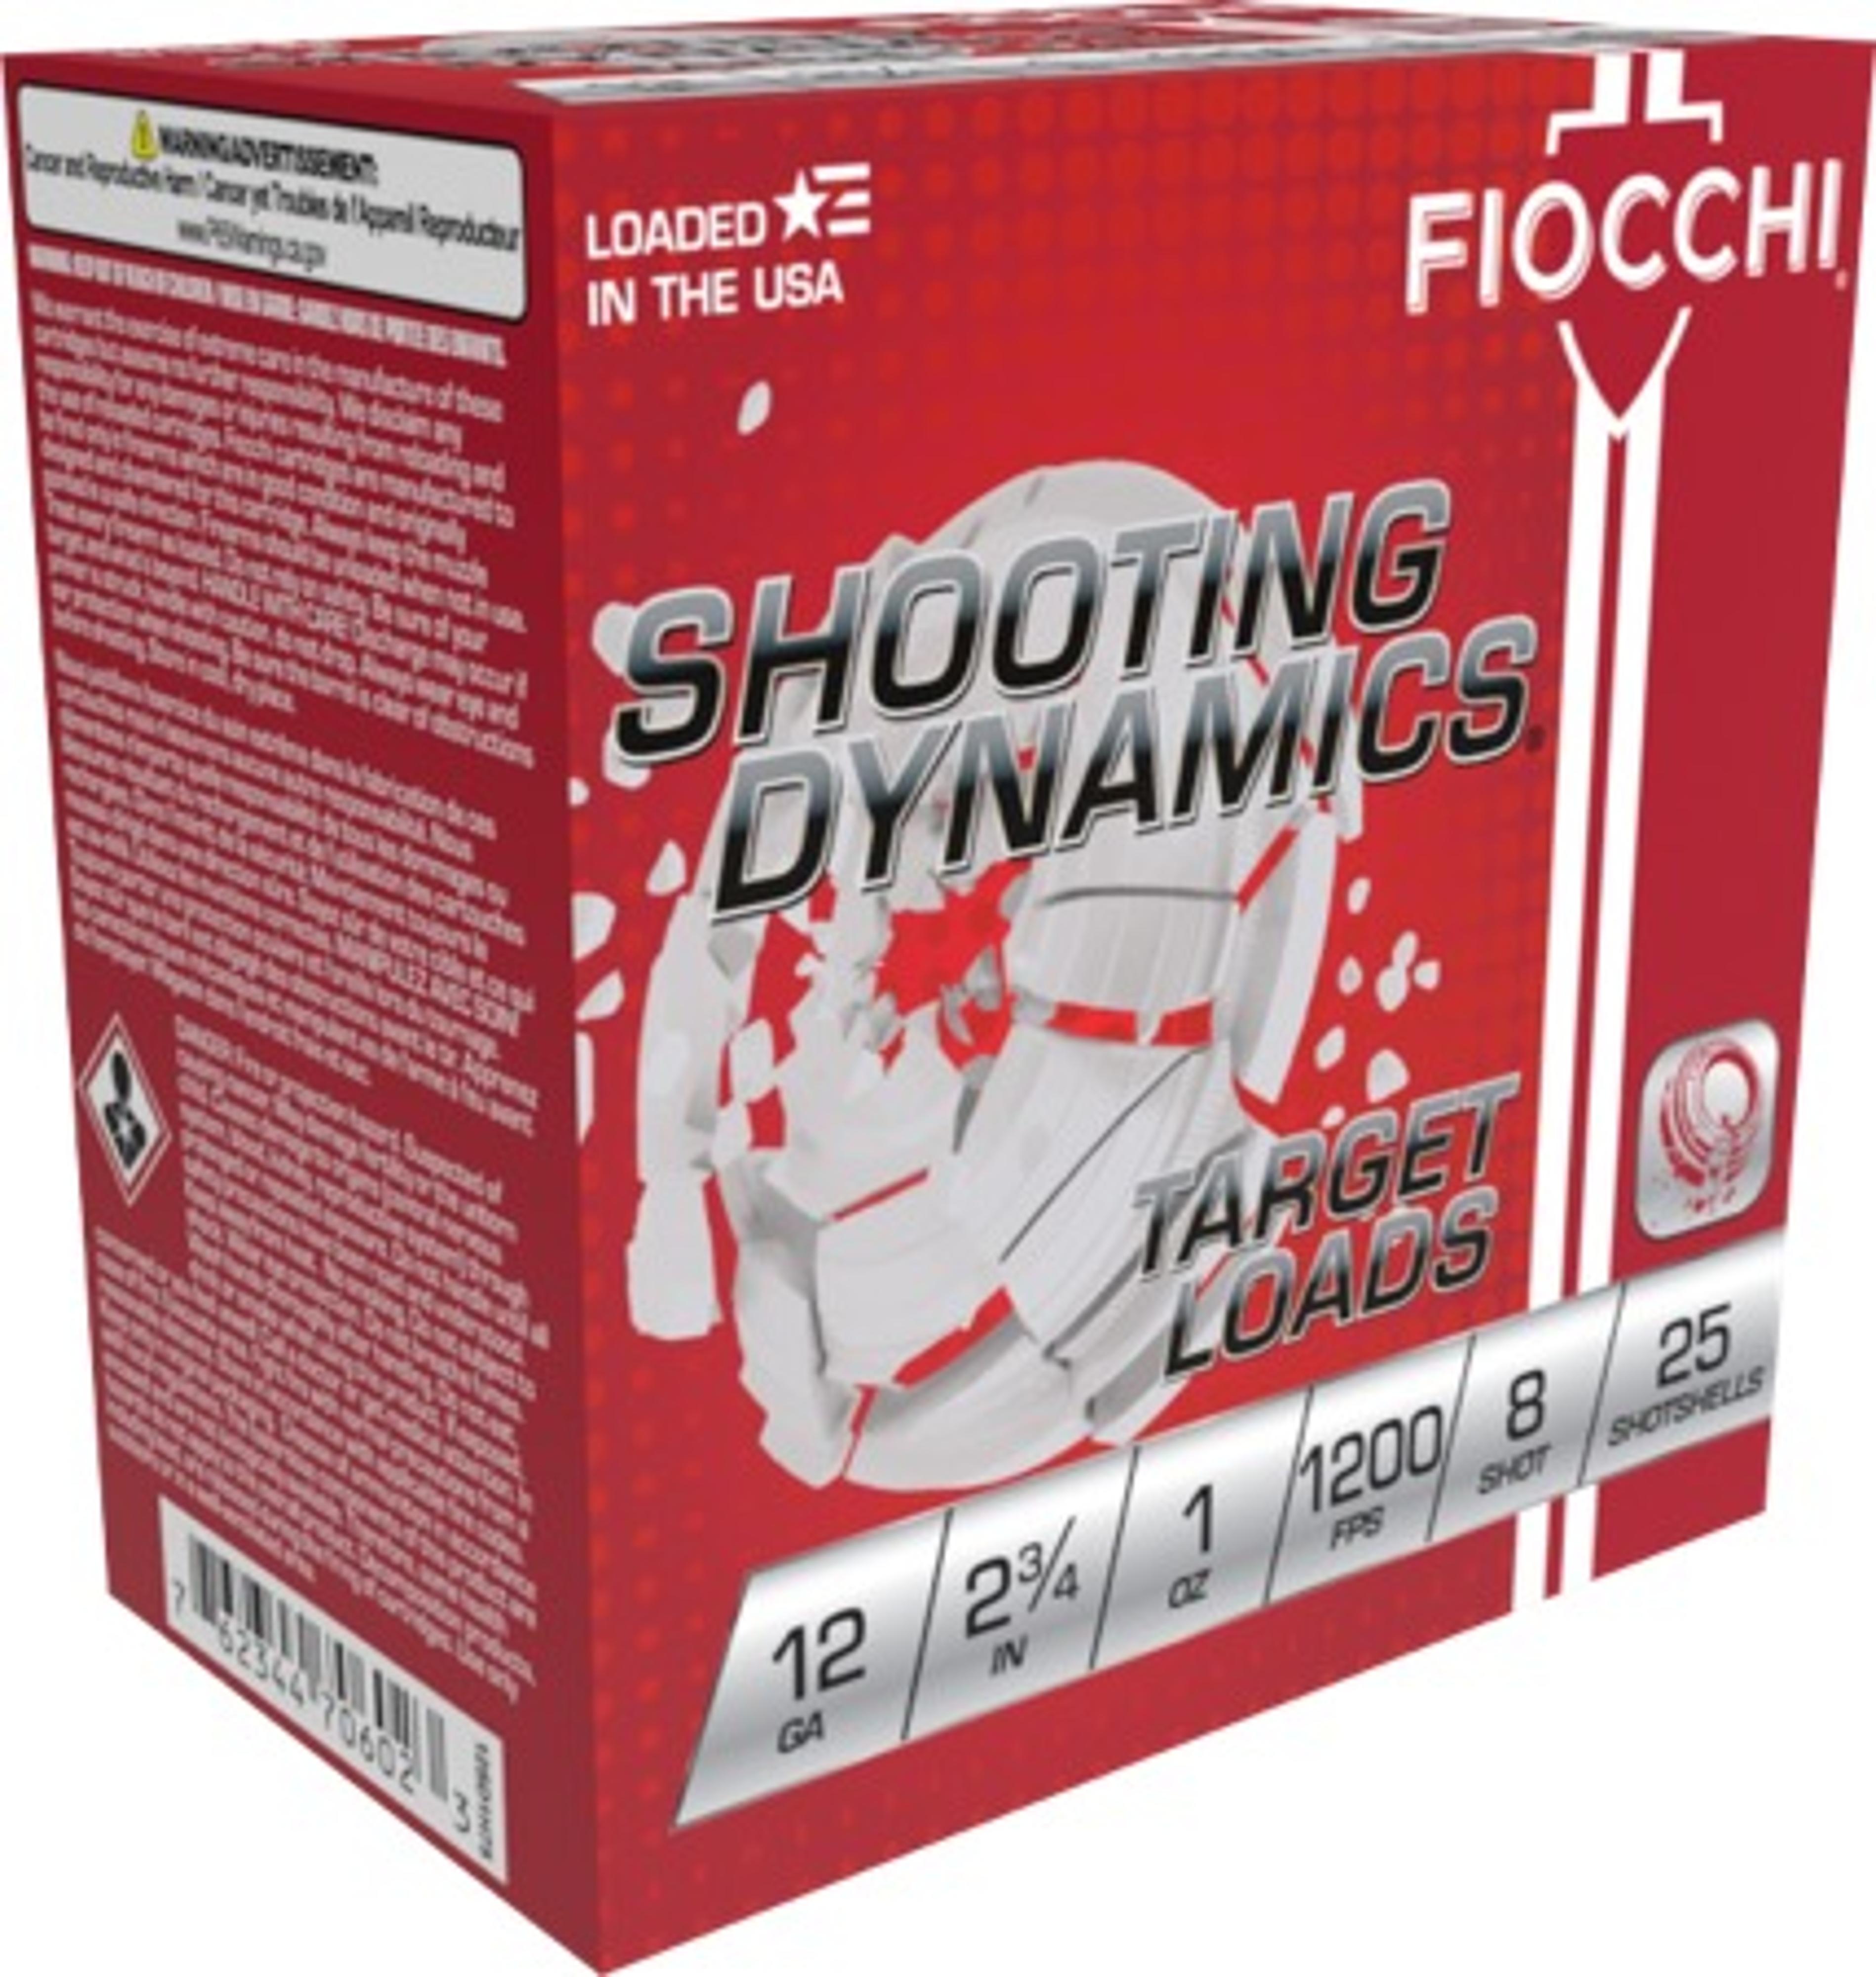  Fiocchi Shooting Dynamics 12ga # 8